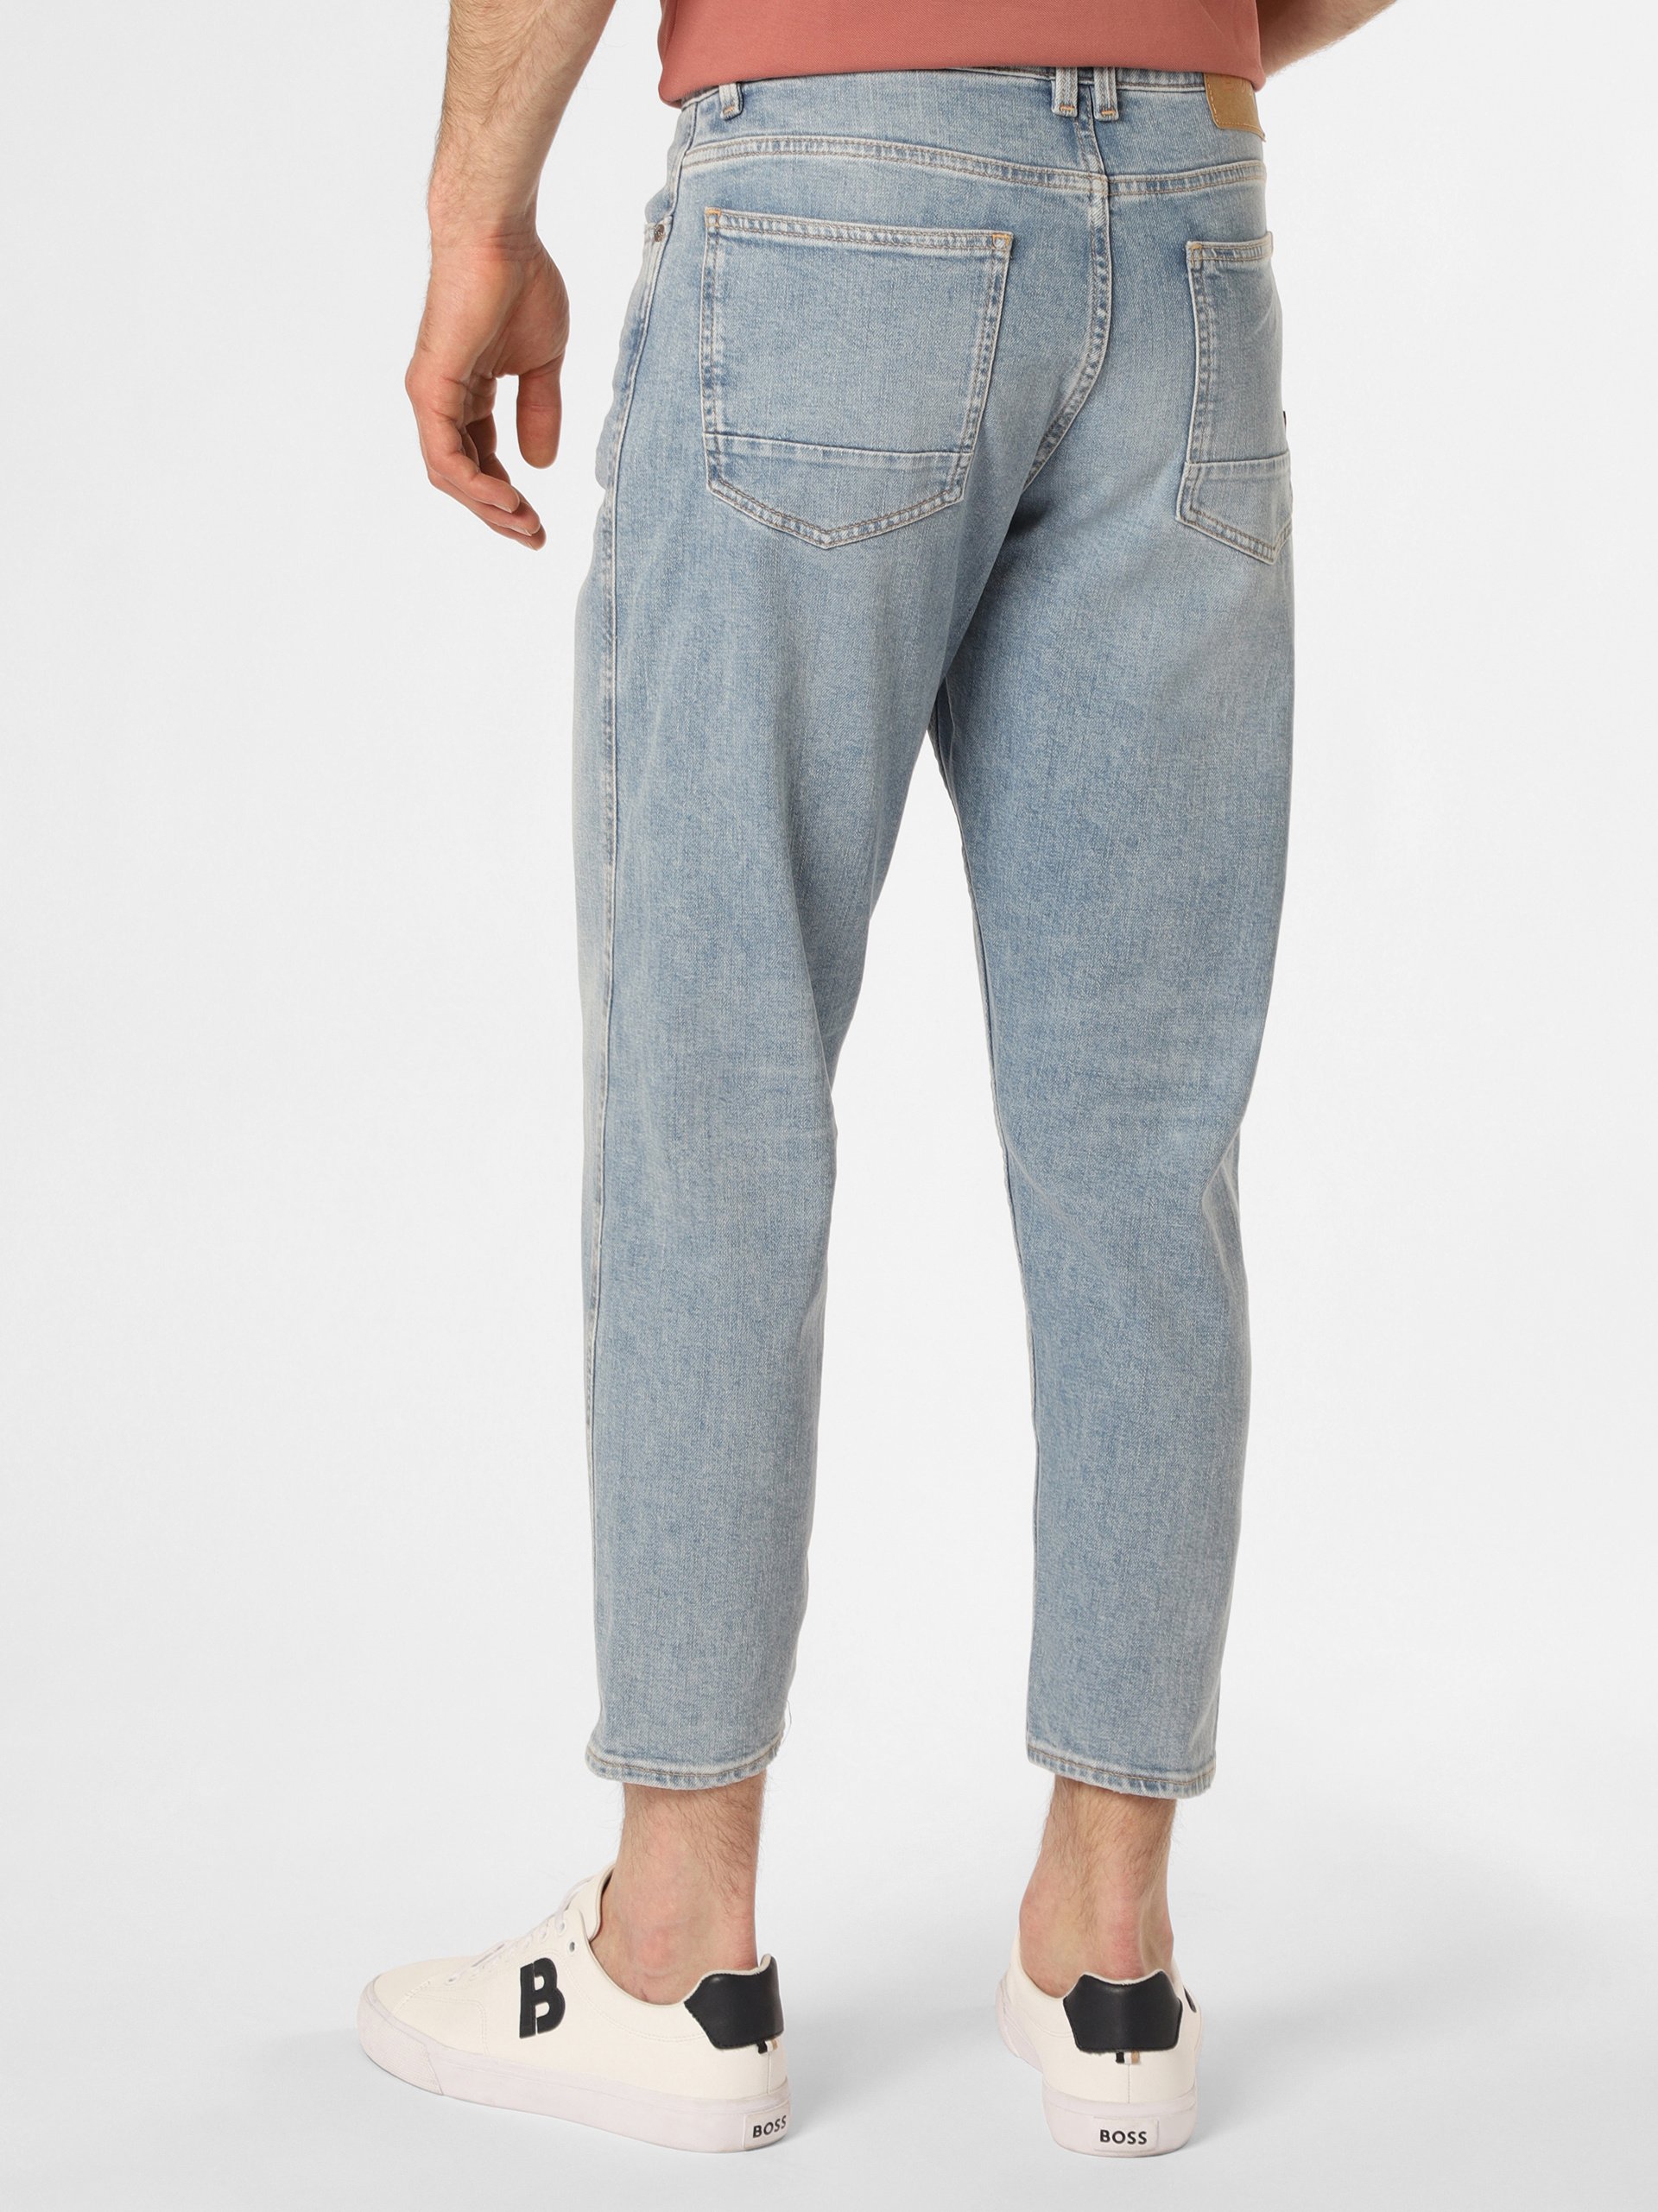 POOL - Herren Tatum Jeans Orange kaufen online BOSS BC-C